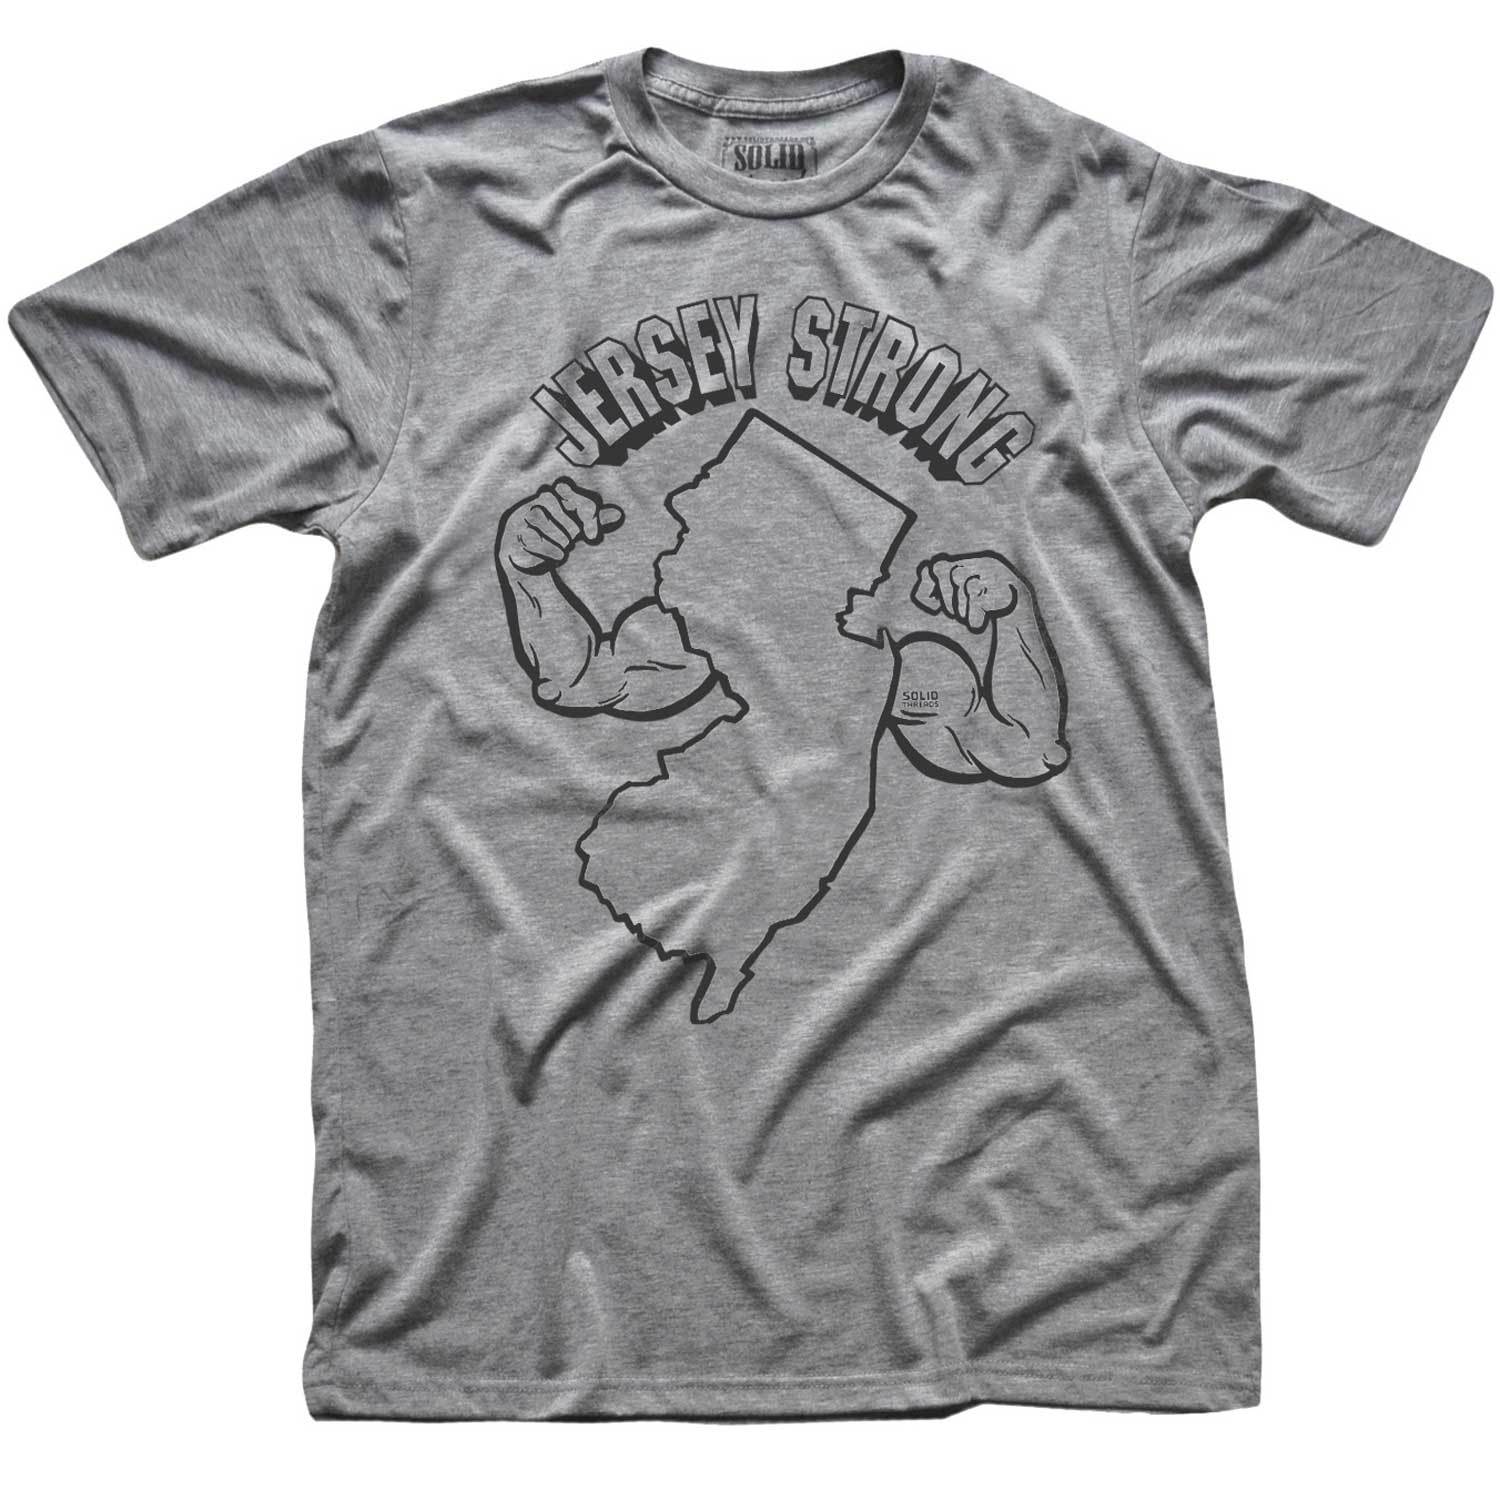 Solid Threads Easy E Retro Sports Graphic Tee | Funny NY Giants Eli Manning T-Shirt Royal / Medium